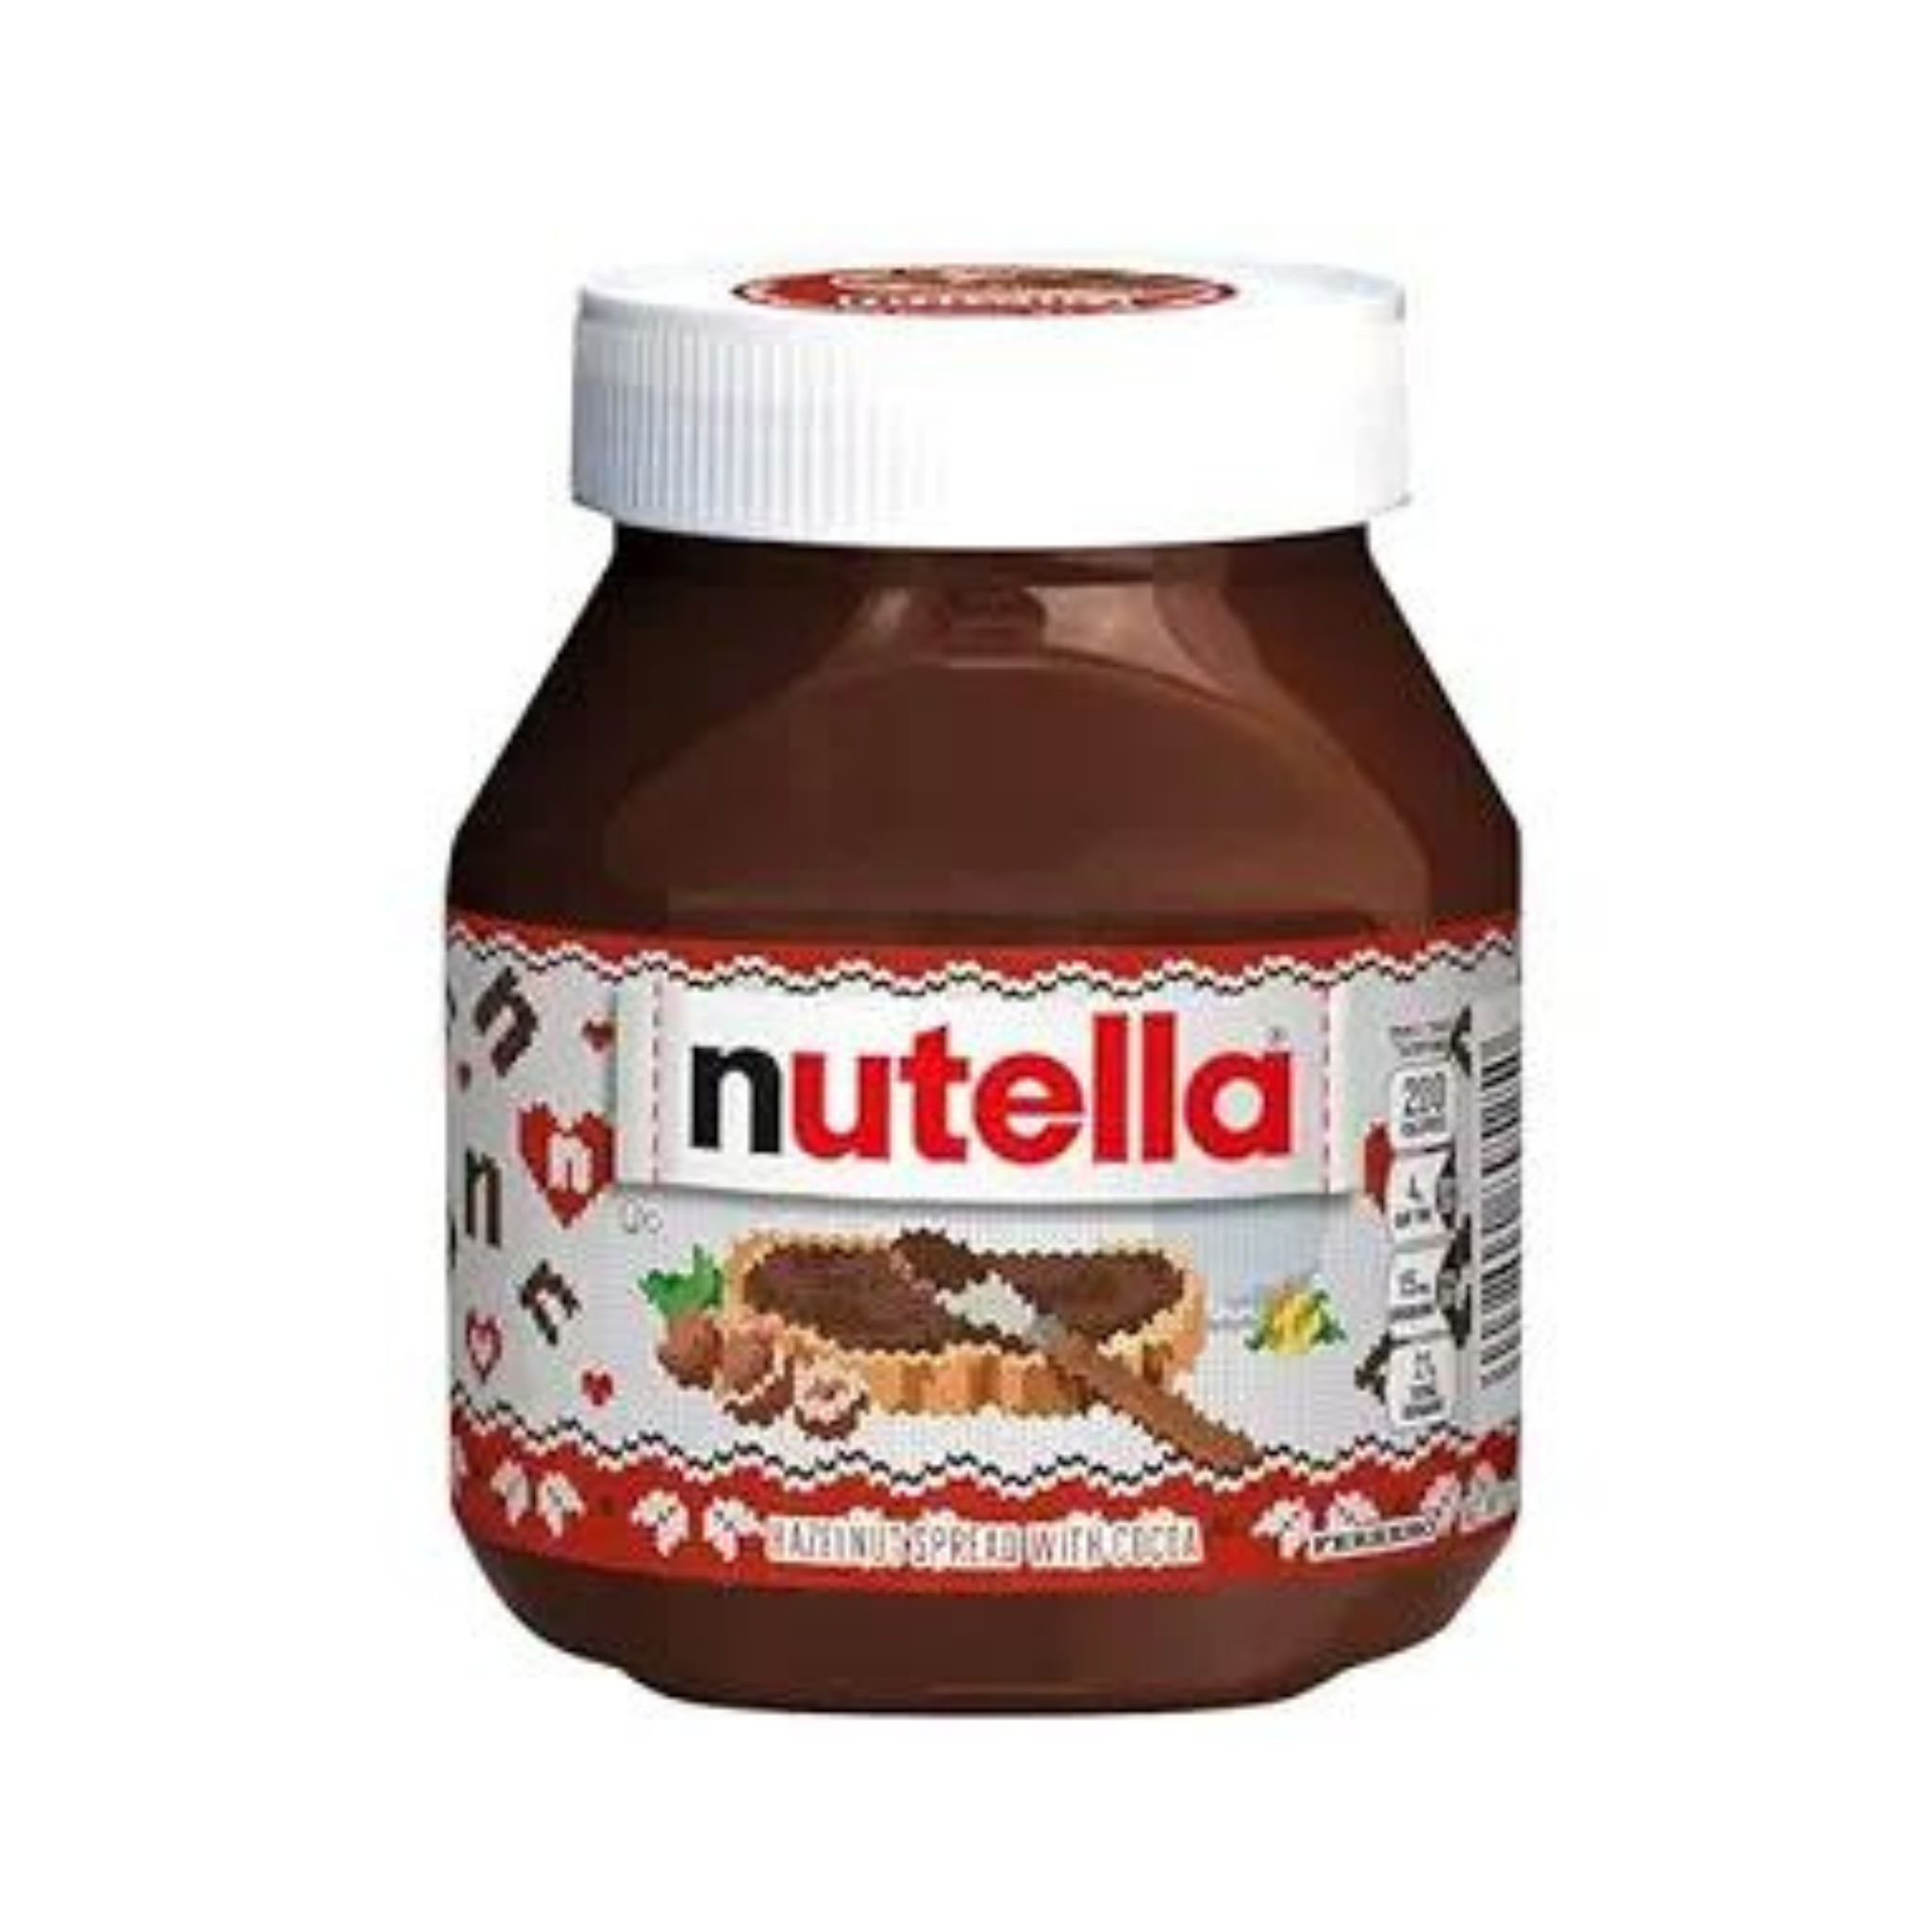 26.5-Oz Nutella Hazelnut Spread w/ Cocoa